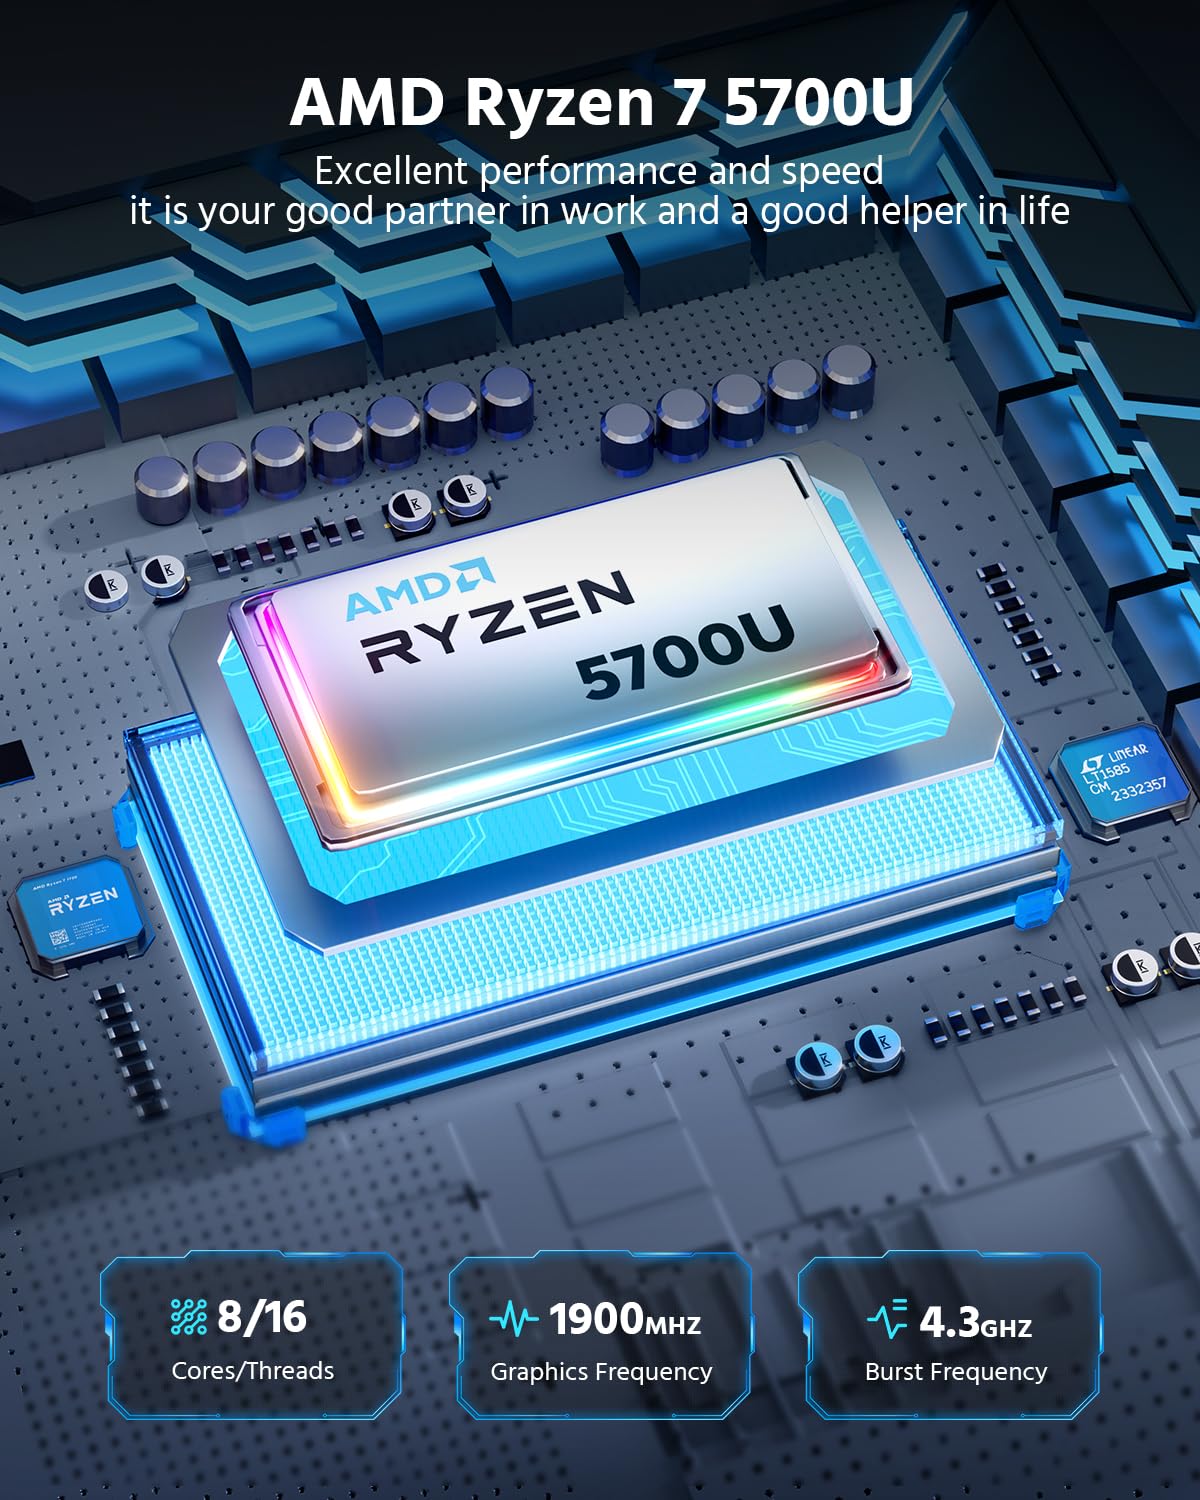 KAMRUI Mini PC Ryzen 7 5700U(8C/16T, up to 4.3GHz)